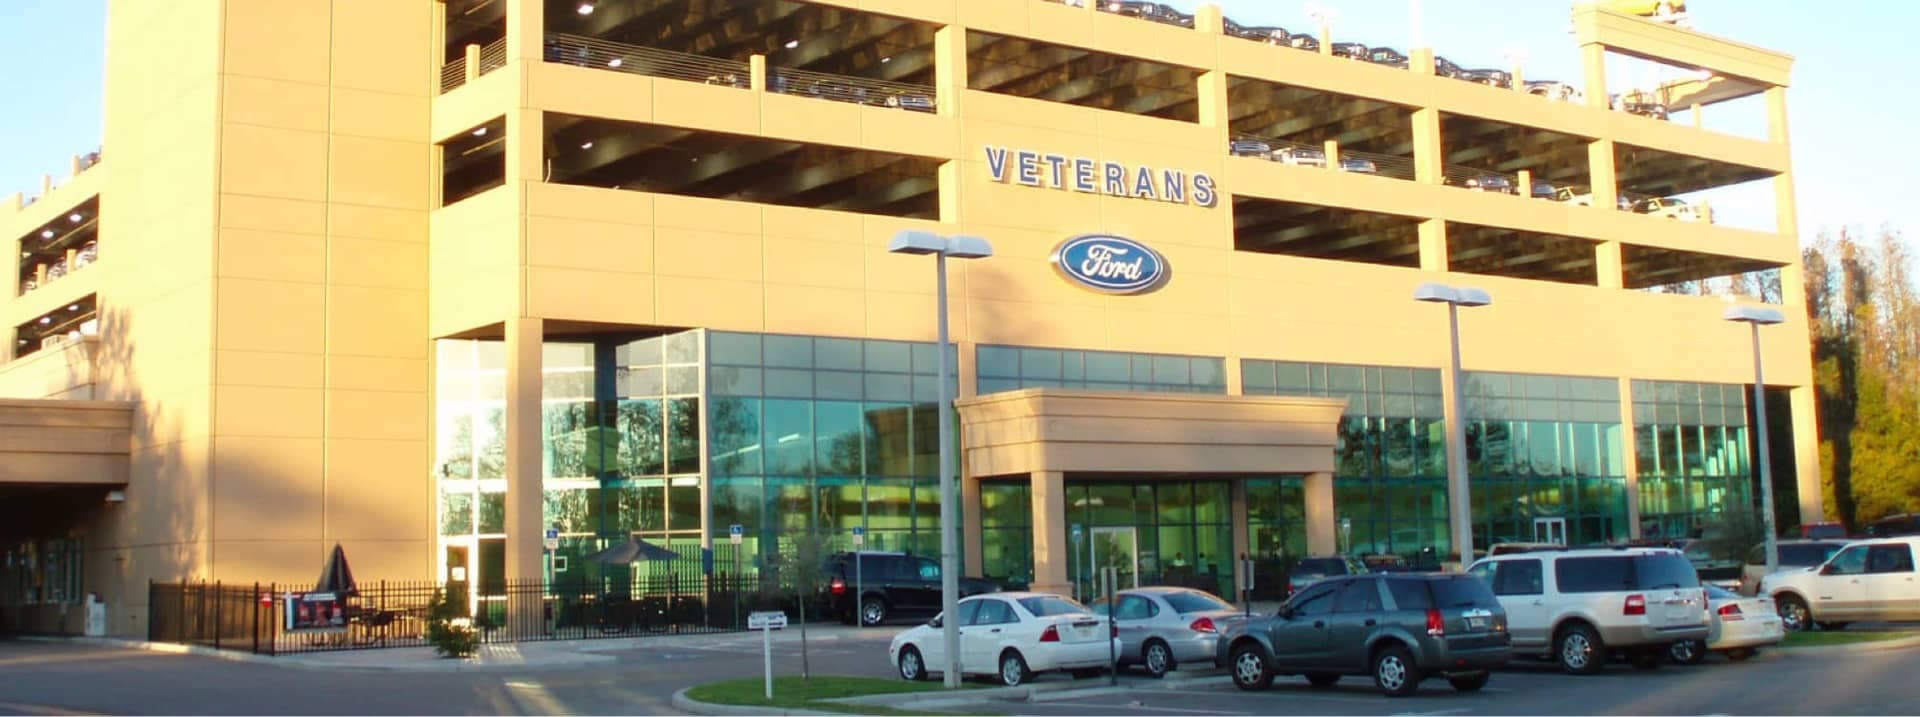 Veterans Ford dealership exterior